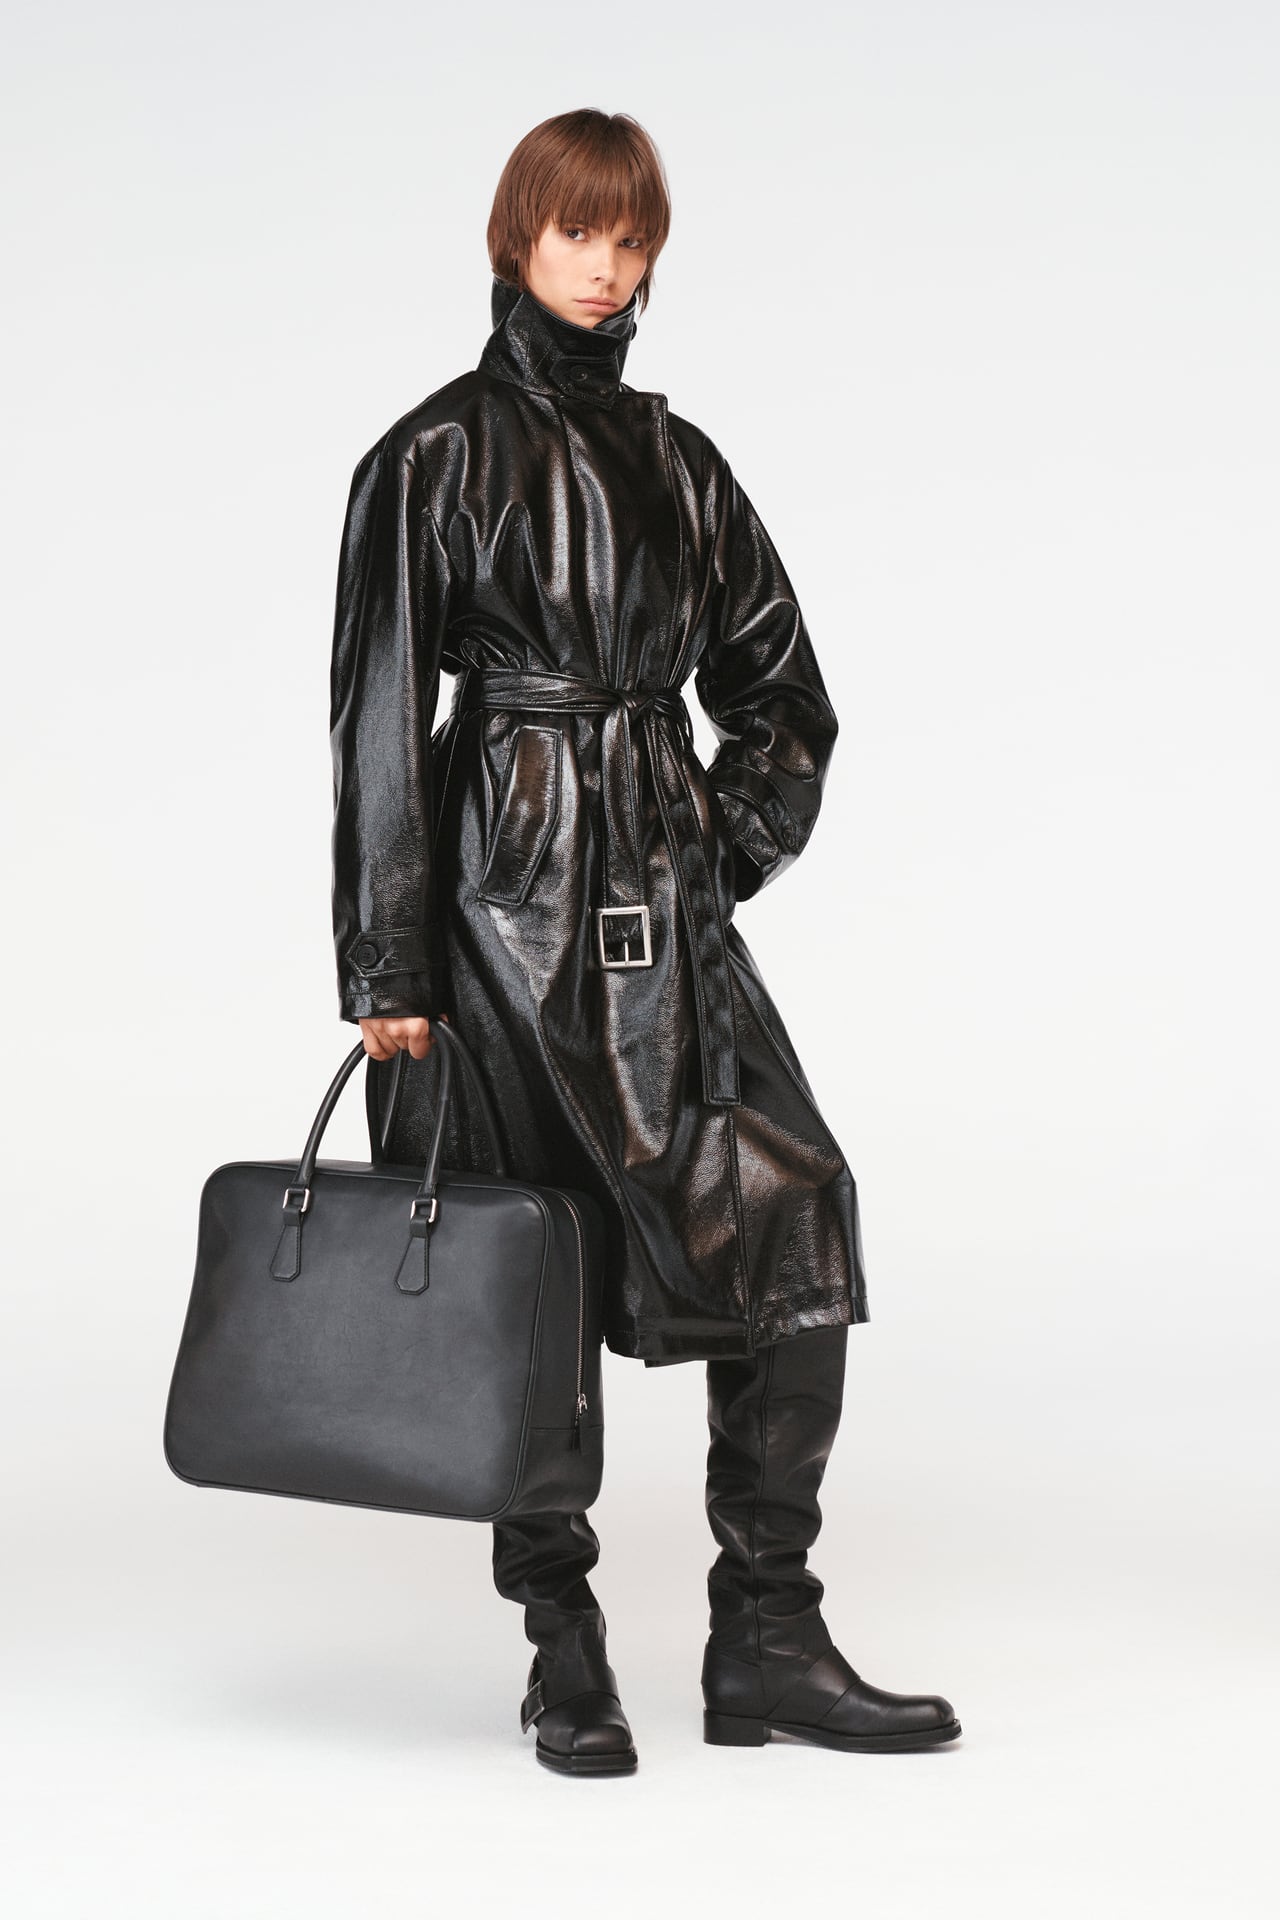 Veda Ashland Leather Trench - Long Sleeve